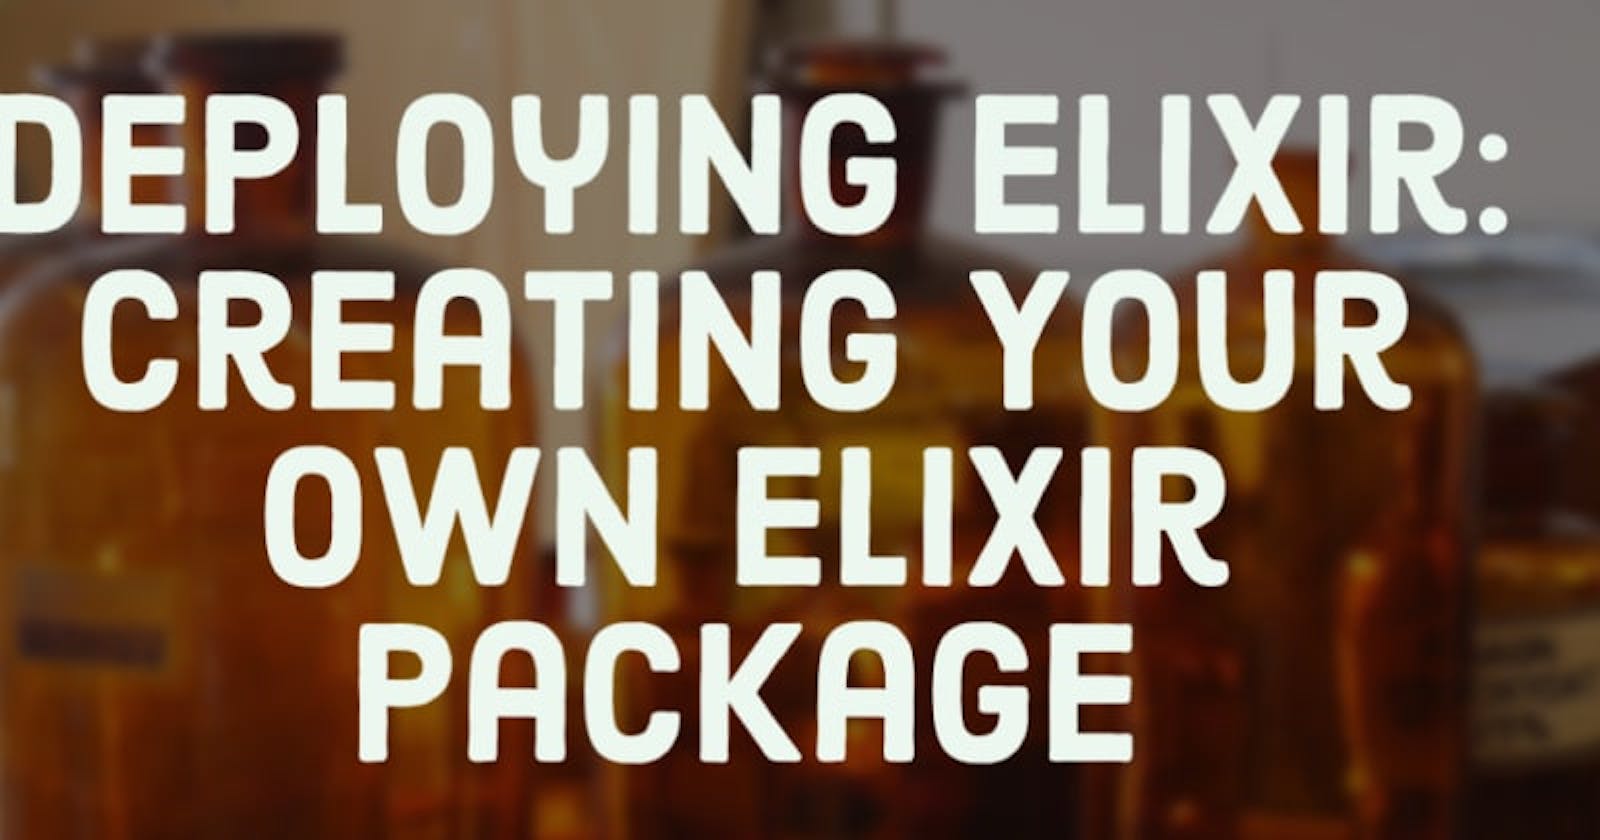 Deploying Elixir: Creating Your Own Elixir Package